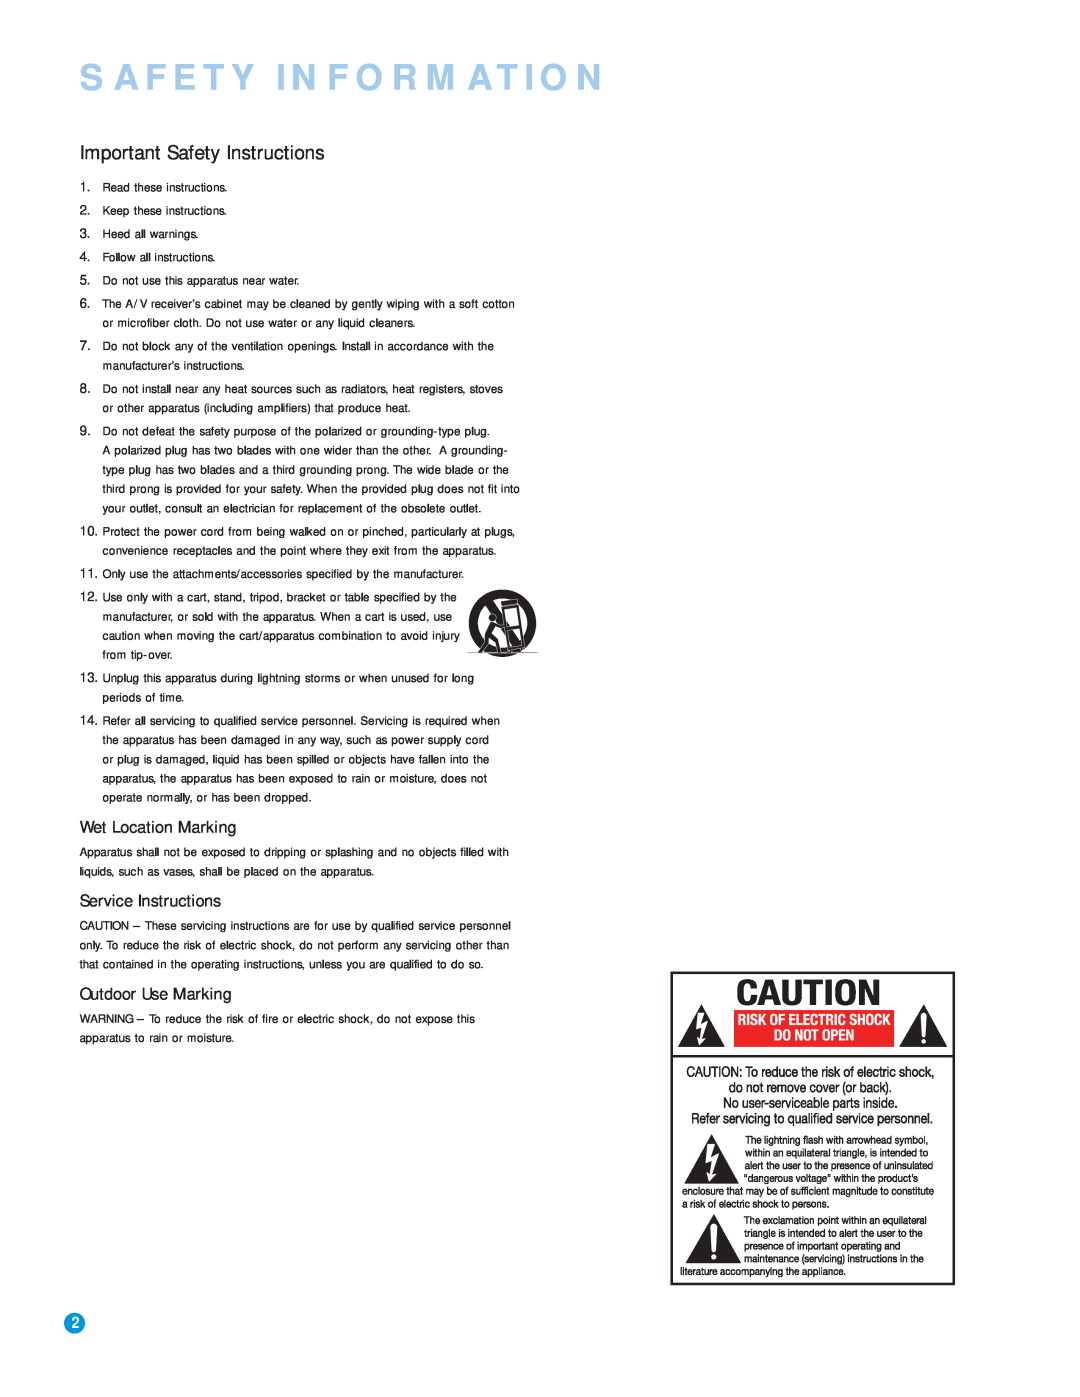 Harman-Kardon AVR 154 Safety Information, Important Safety Instructions, Wet Location Marking, Service Instructions 